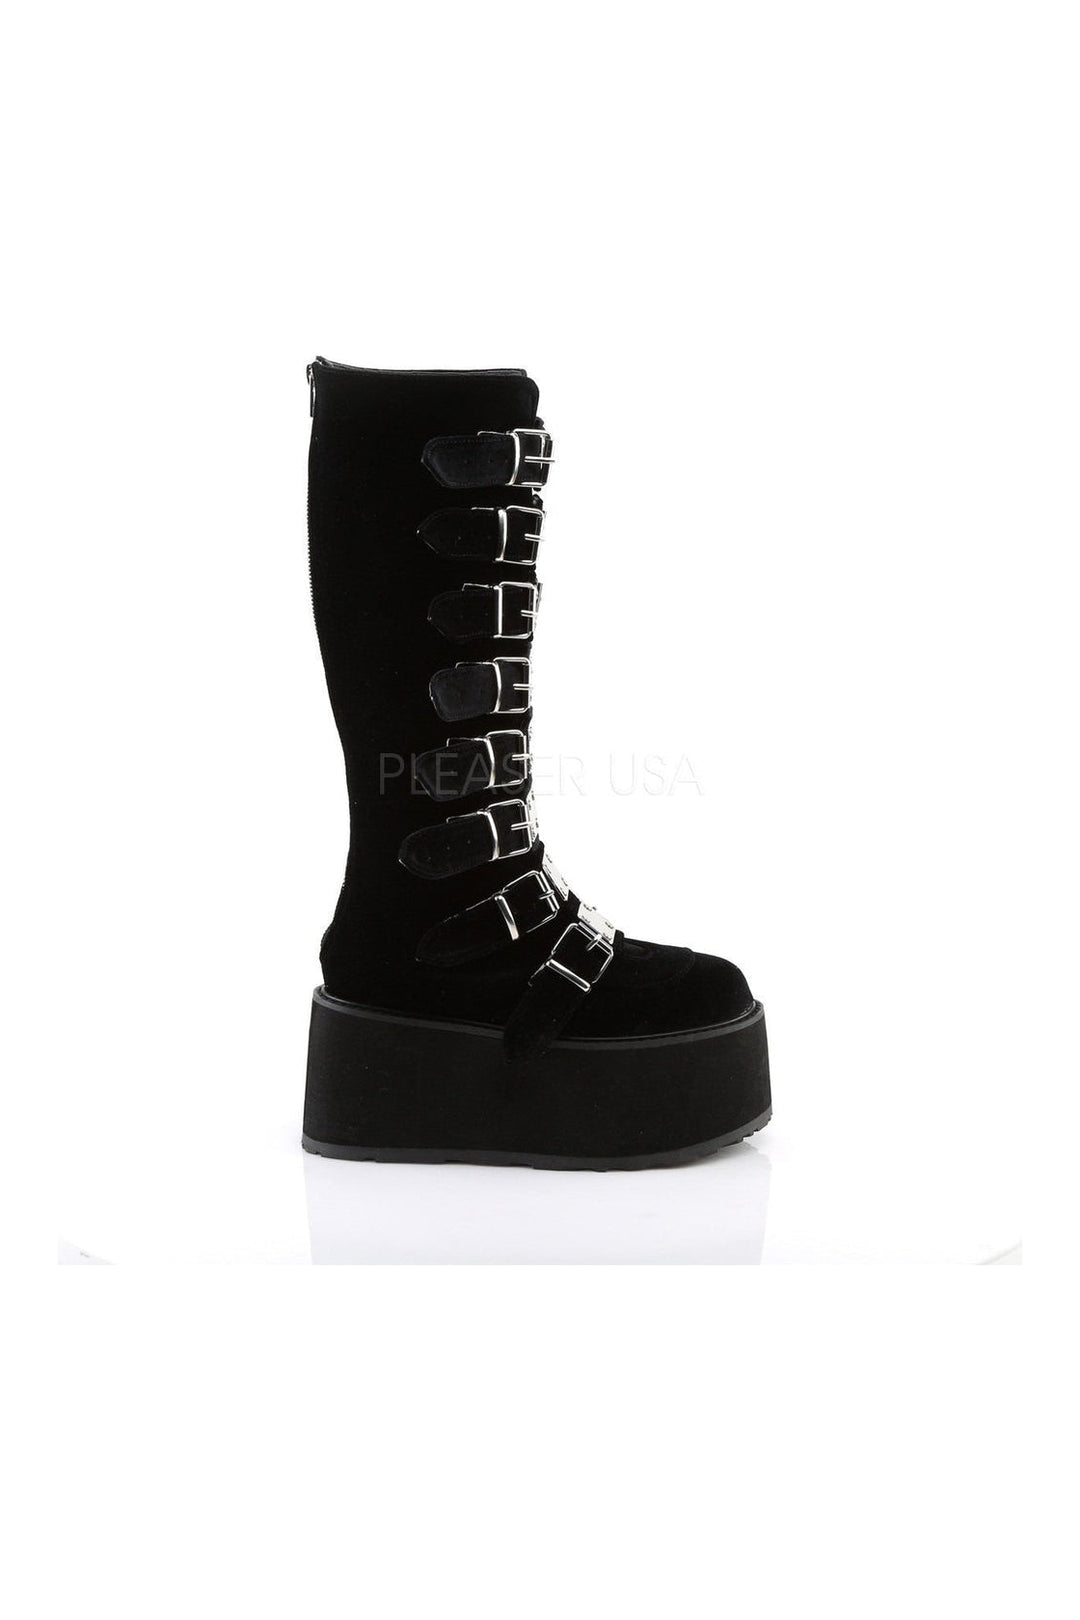 DAMNED-318 Demonia Knee Boot | Black Velvet-Demonia-Knee Boots-SEXYSHOES.COM